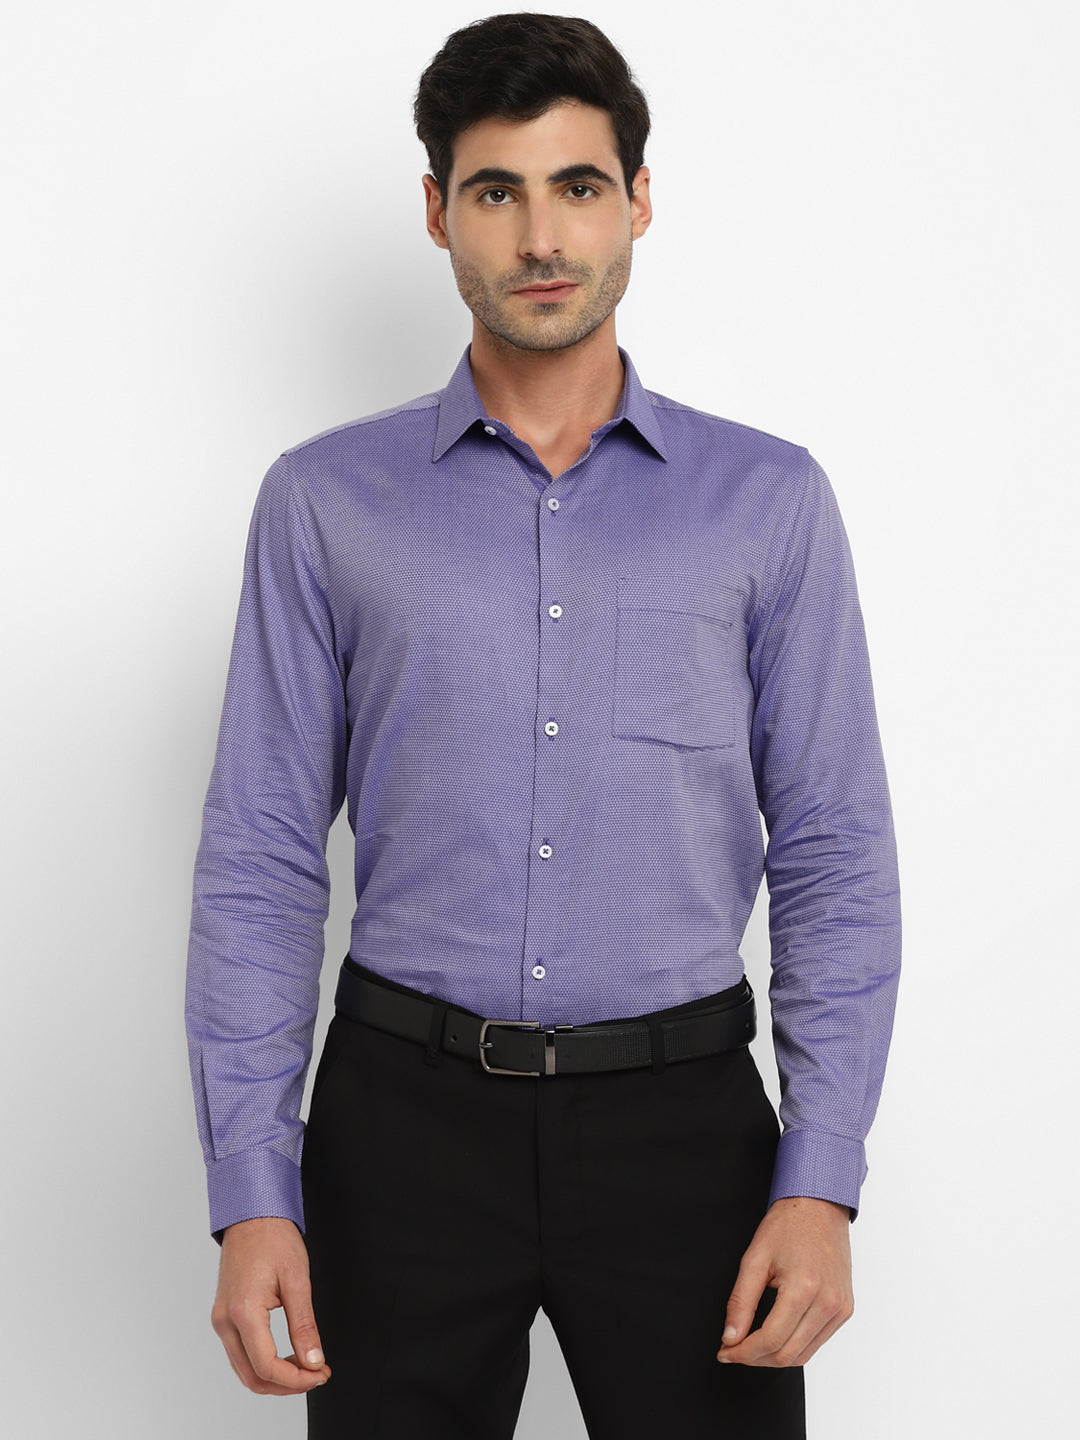 Purple Cotton Self Design Slim Fit Shirt